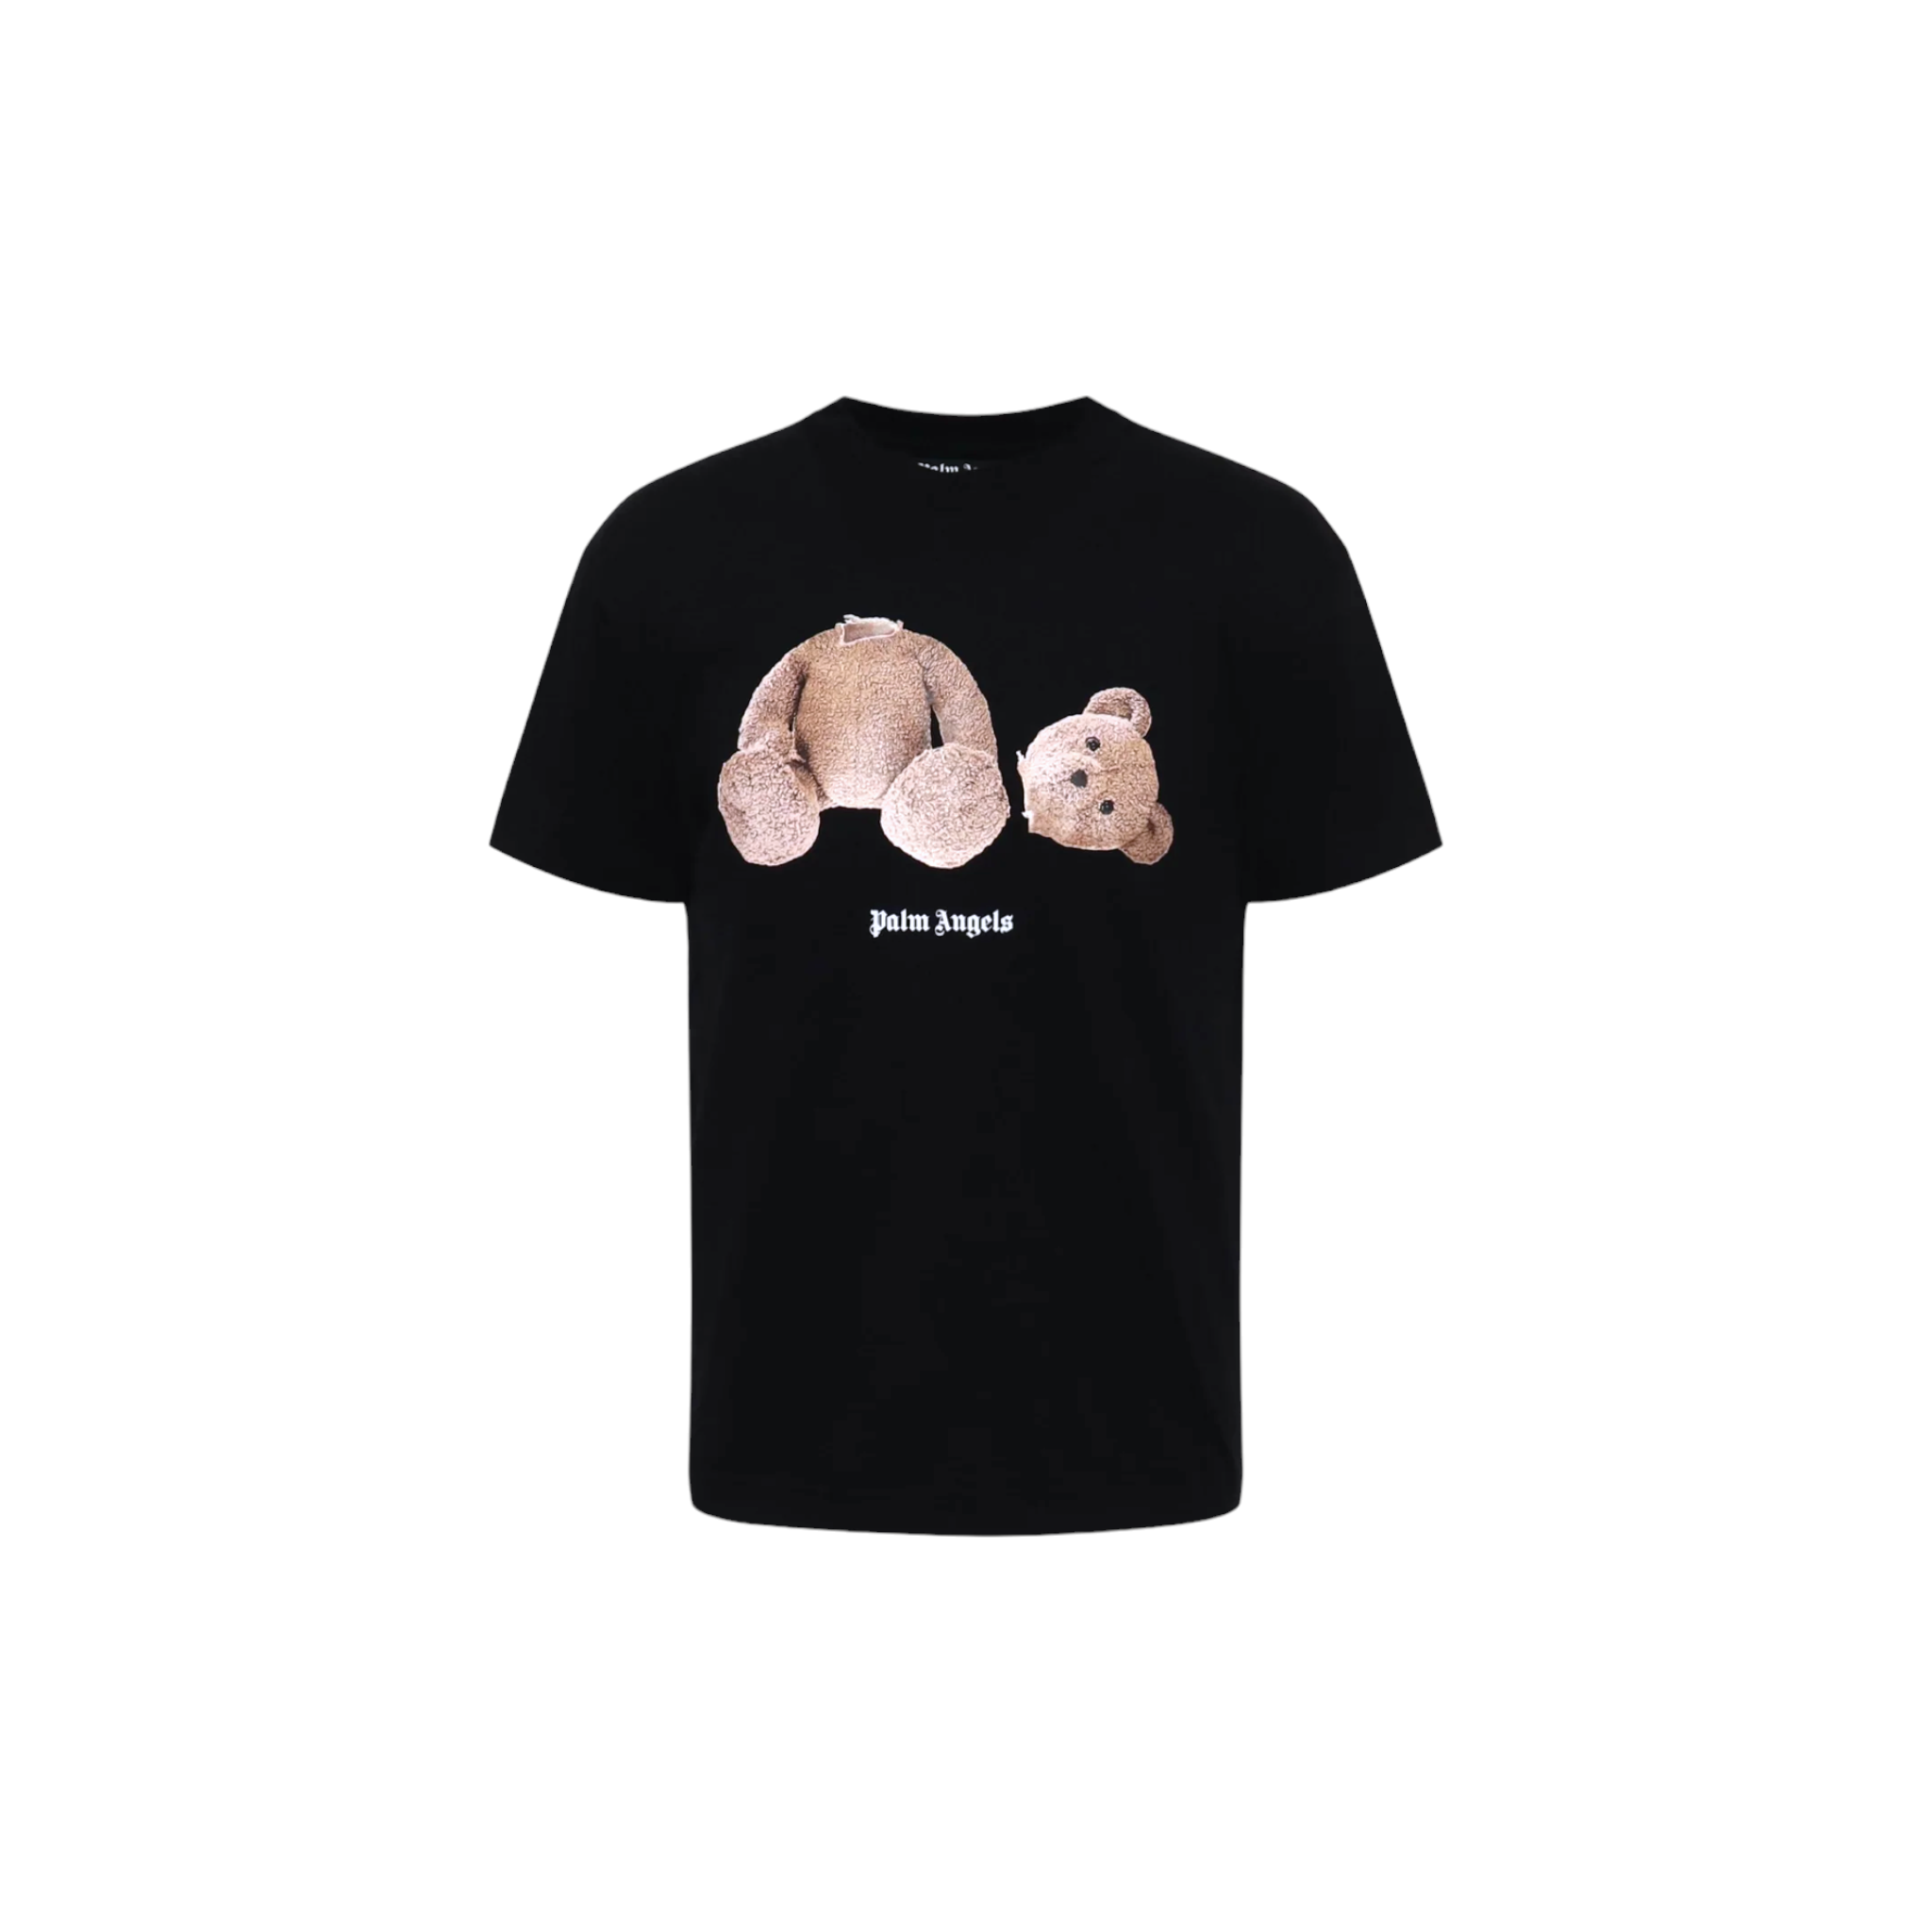 NWT PALM ANGELS Black Teddy Bear Hoodie Sweatshirt Size XXS $830